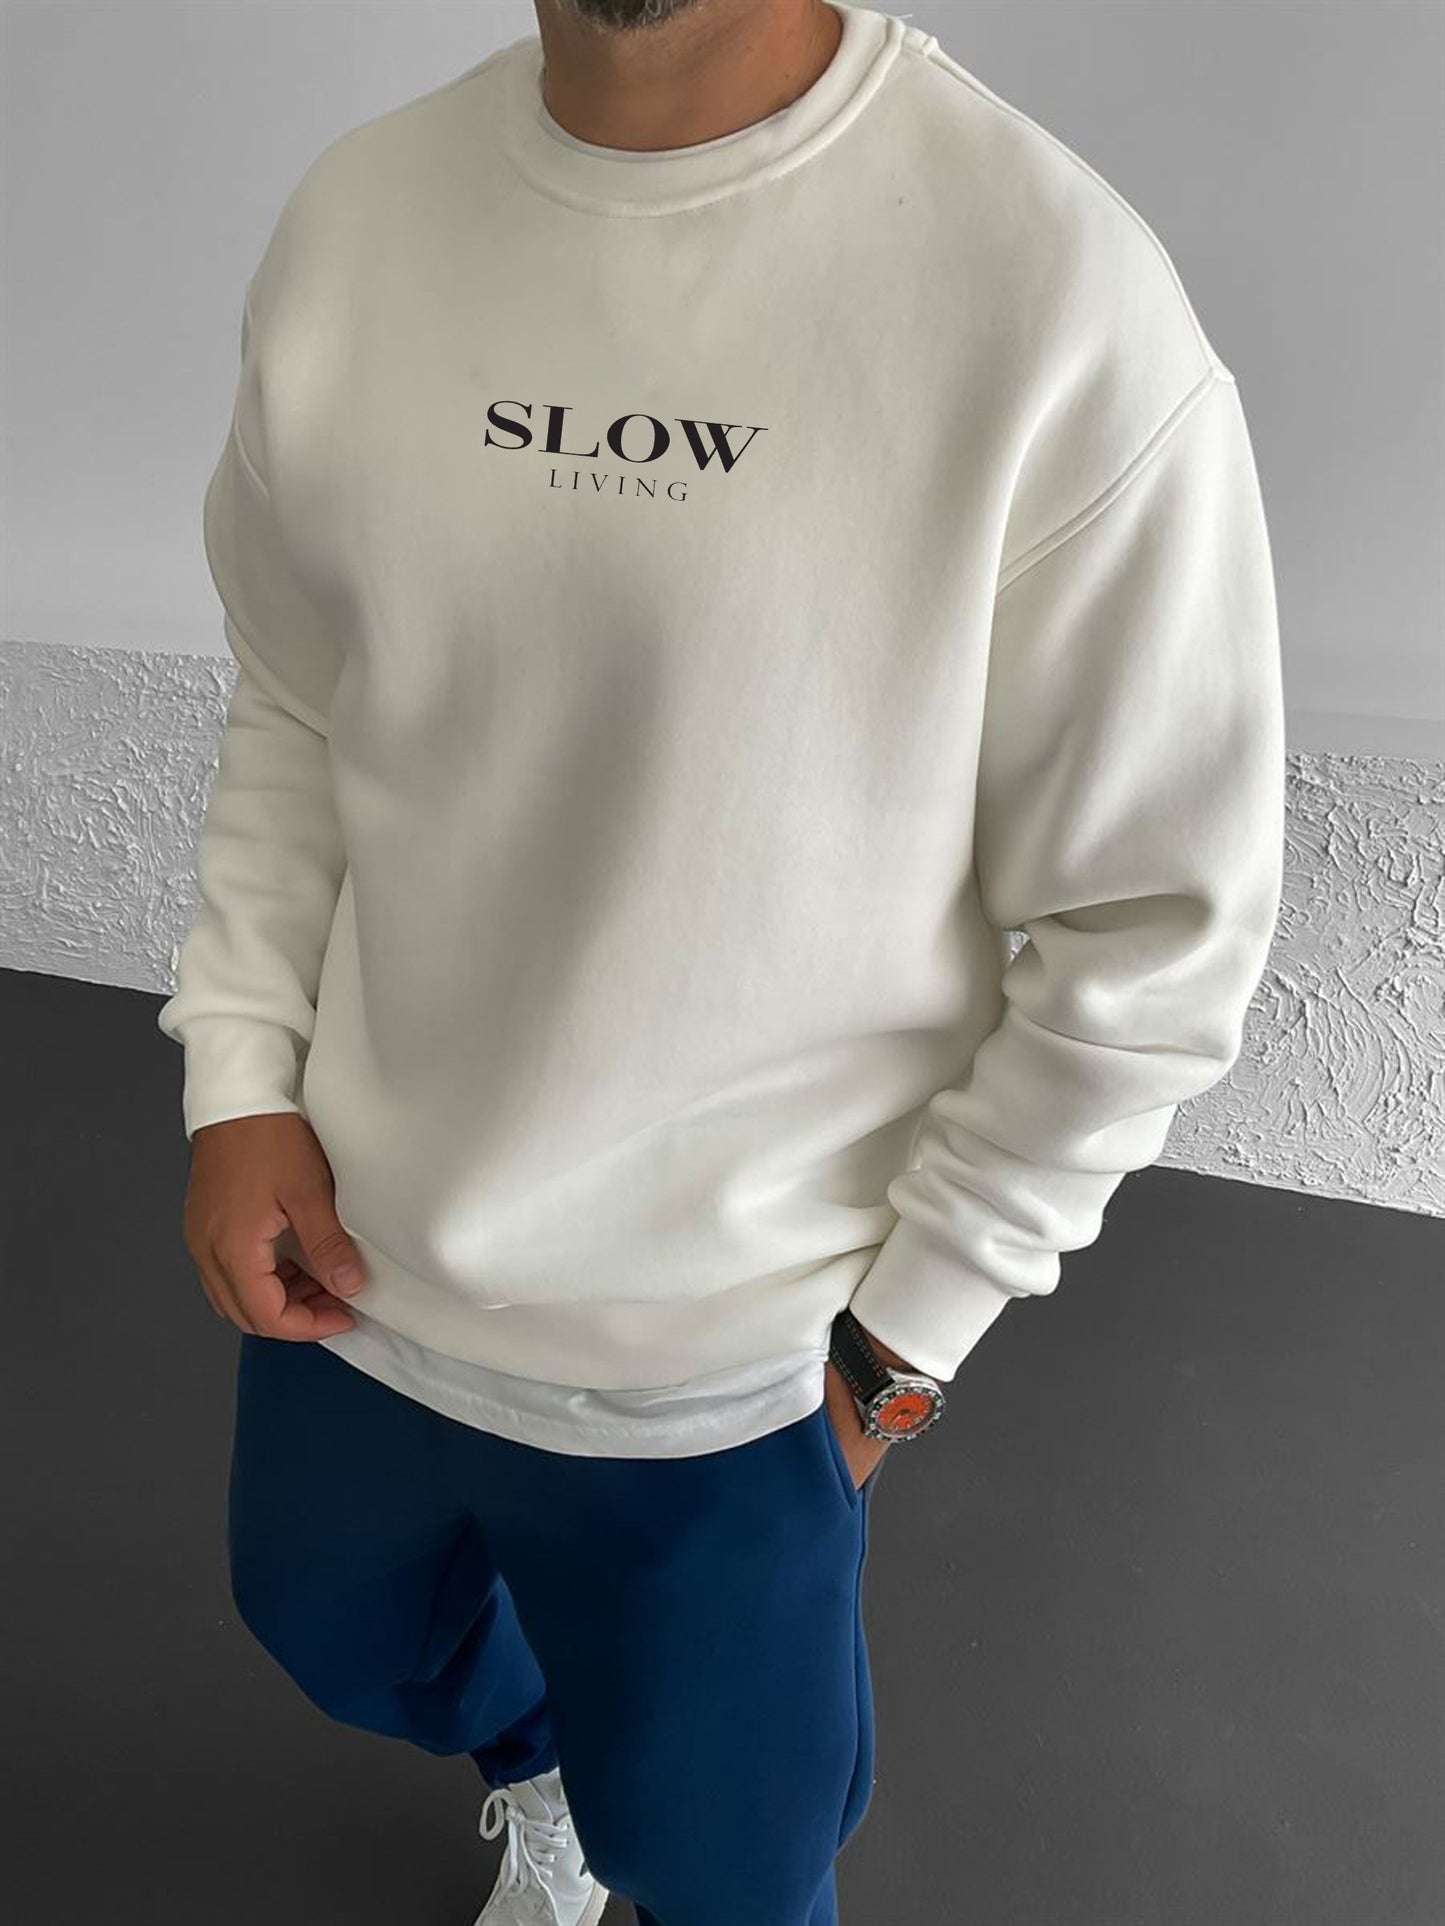 Off-White "Slow Living" Printed Oversize Sweatshirt